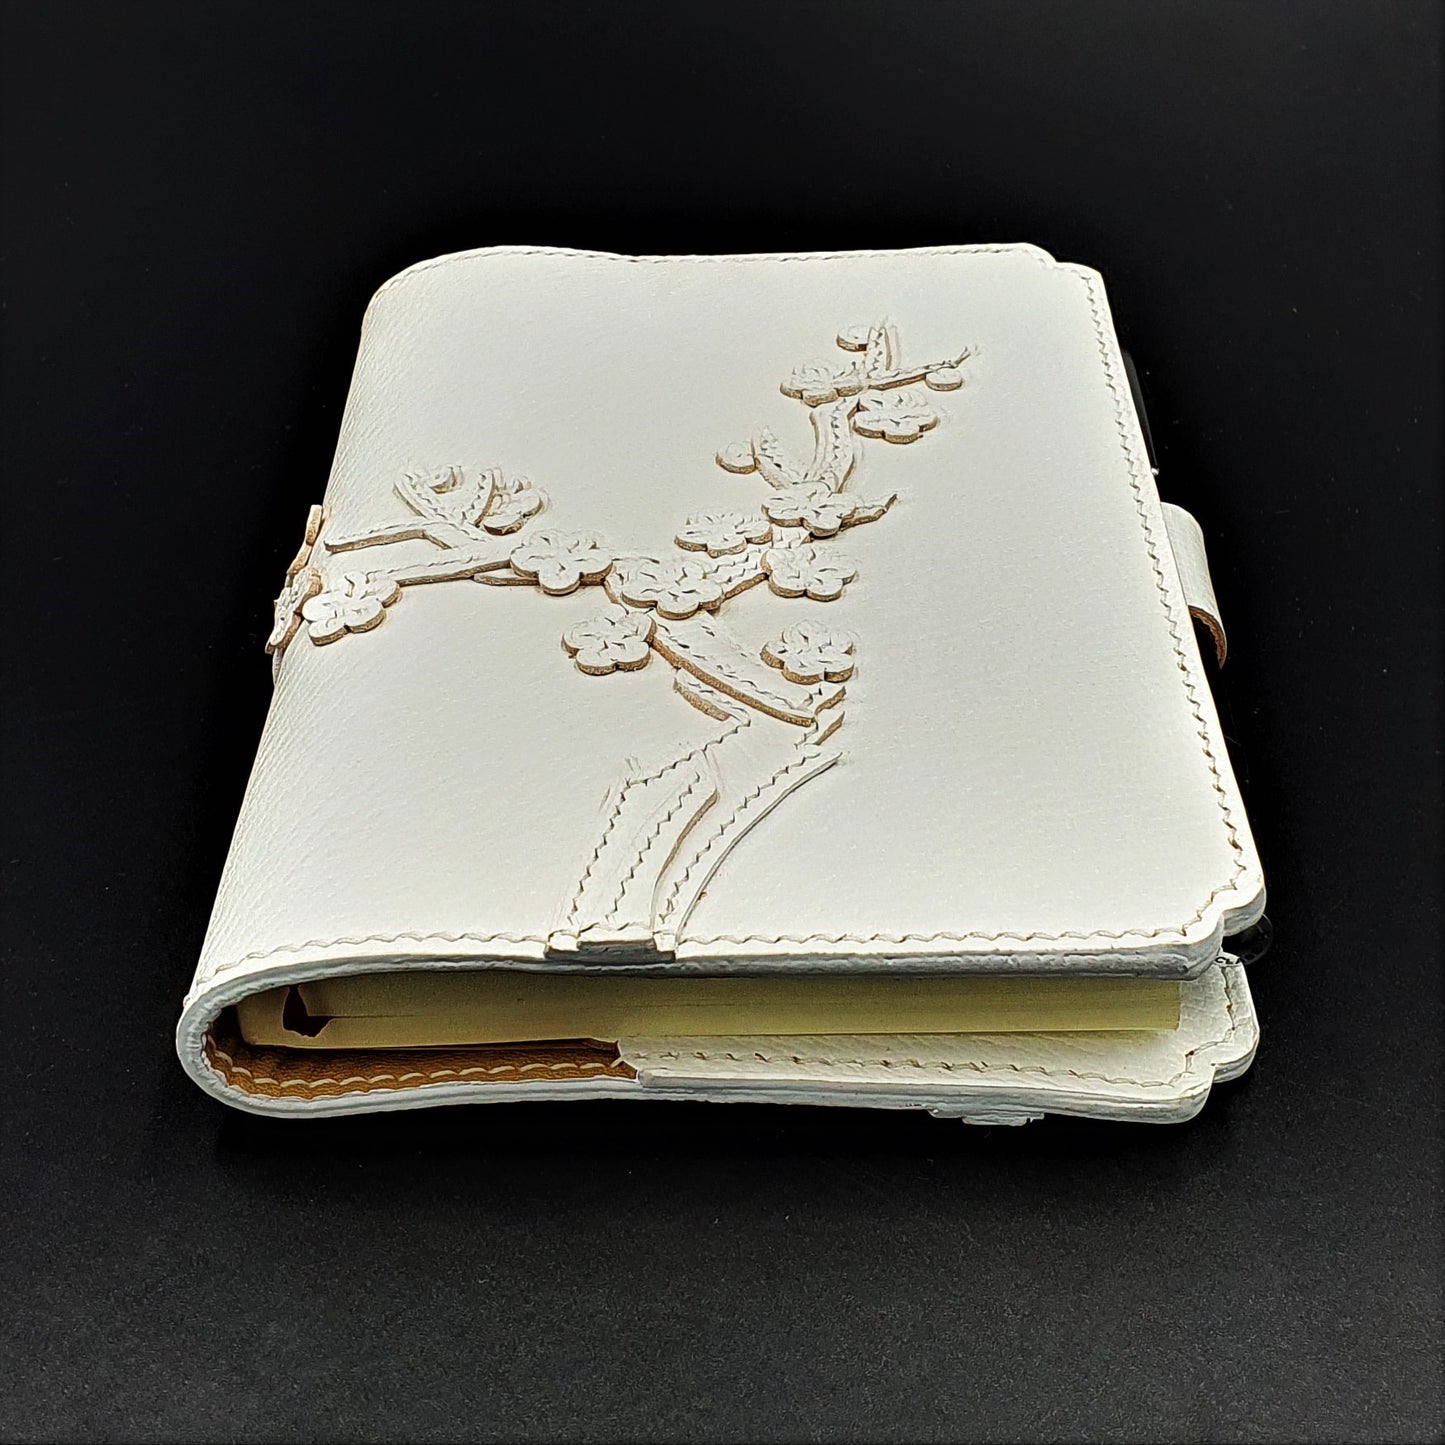 Studio Arkademie MING DH PLUM BLOSSOM A6 Portrait Notebook Sleeve, White